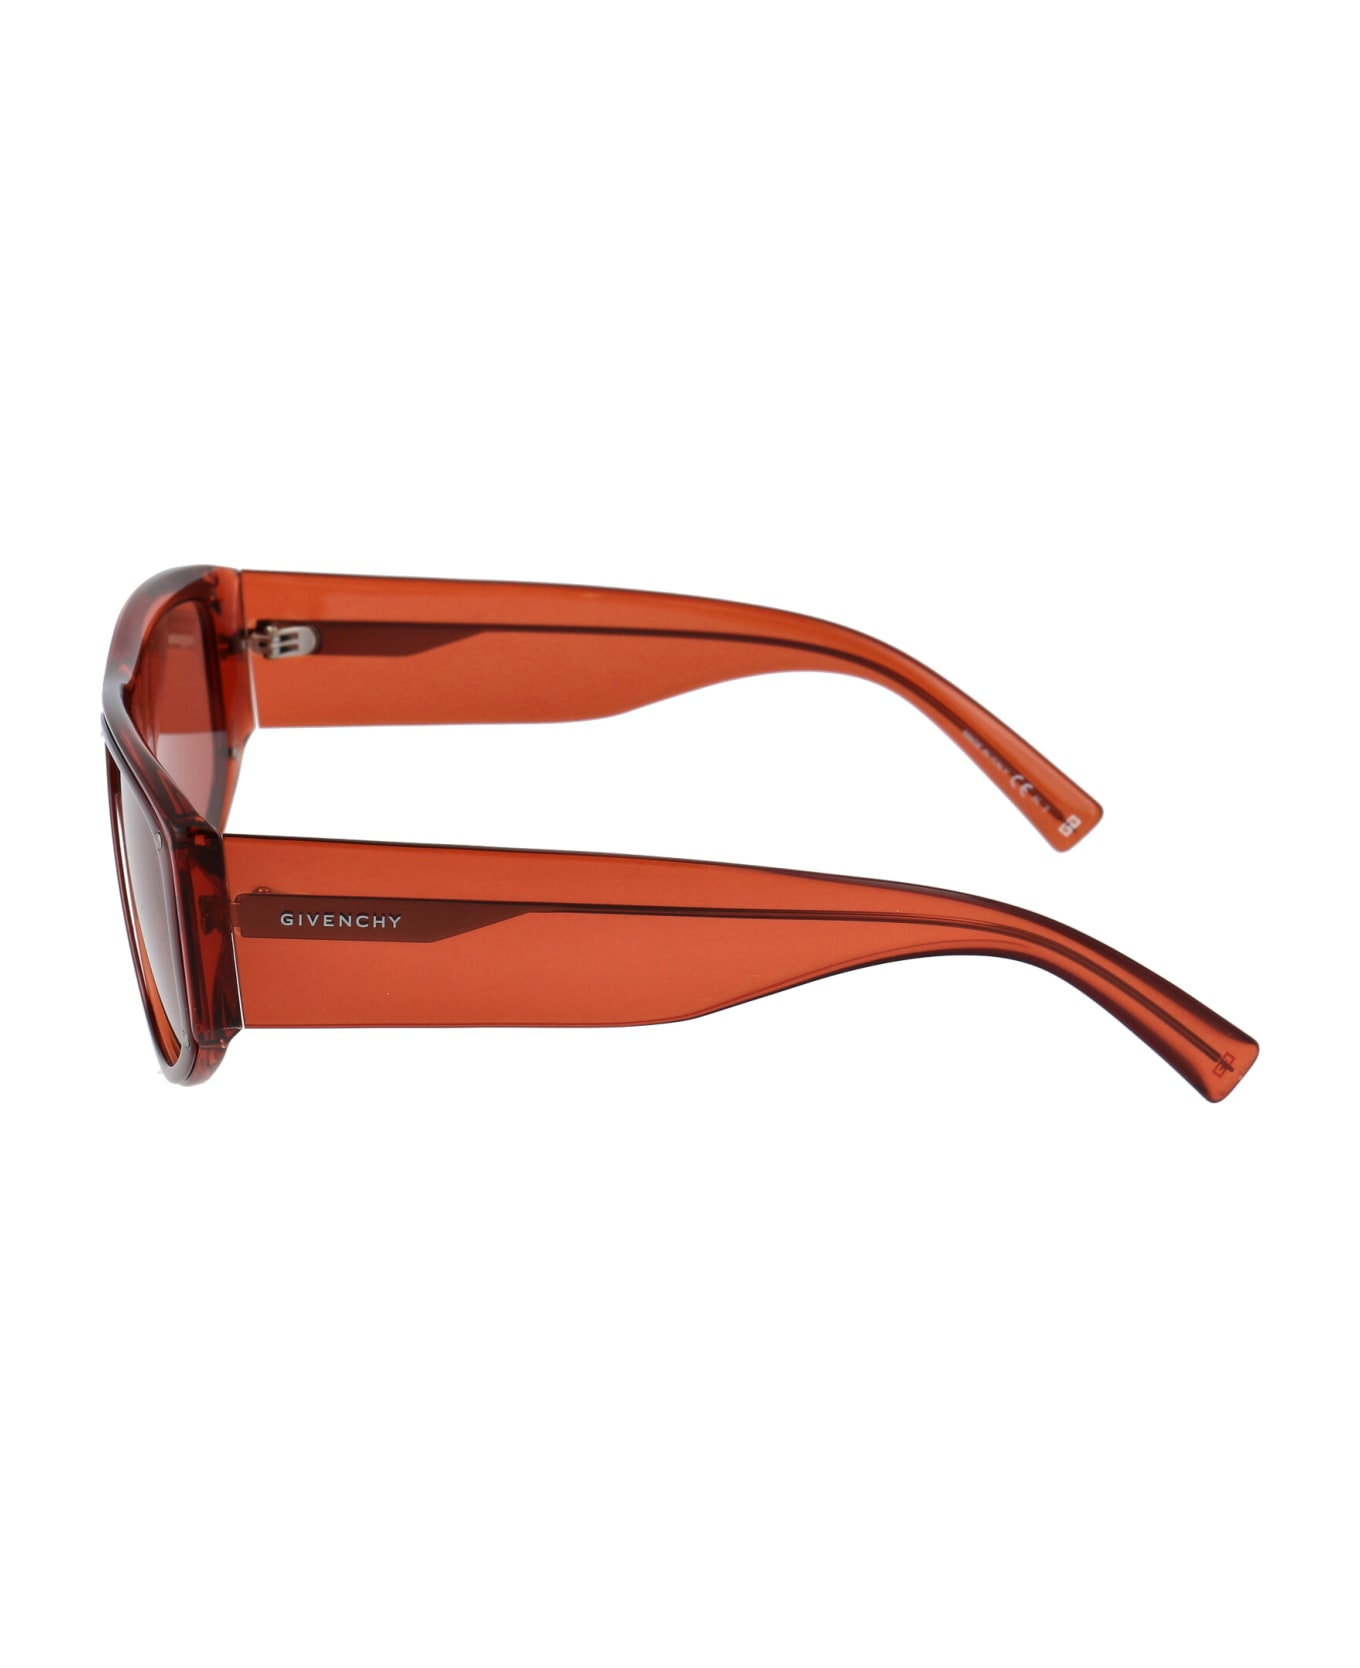 Givenchy Eyewear Gv 7177/s Sunglasses - 2LFU1 TRBRCKPRLCOR